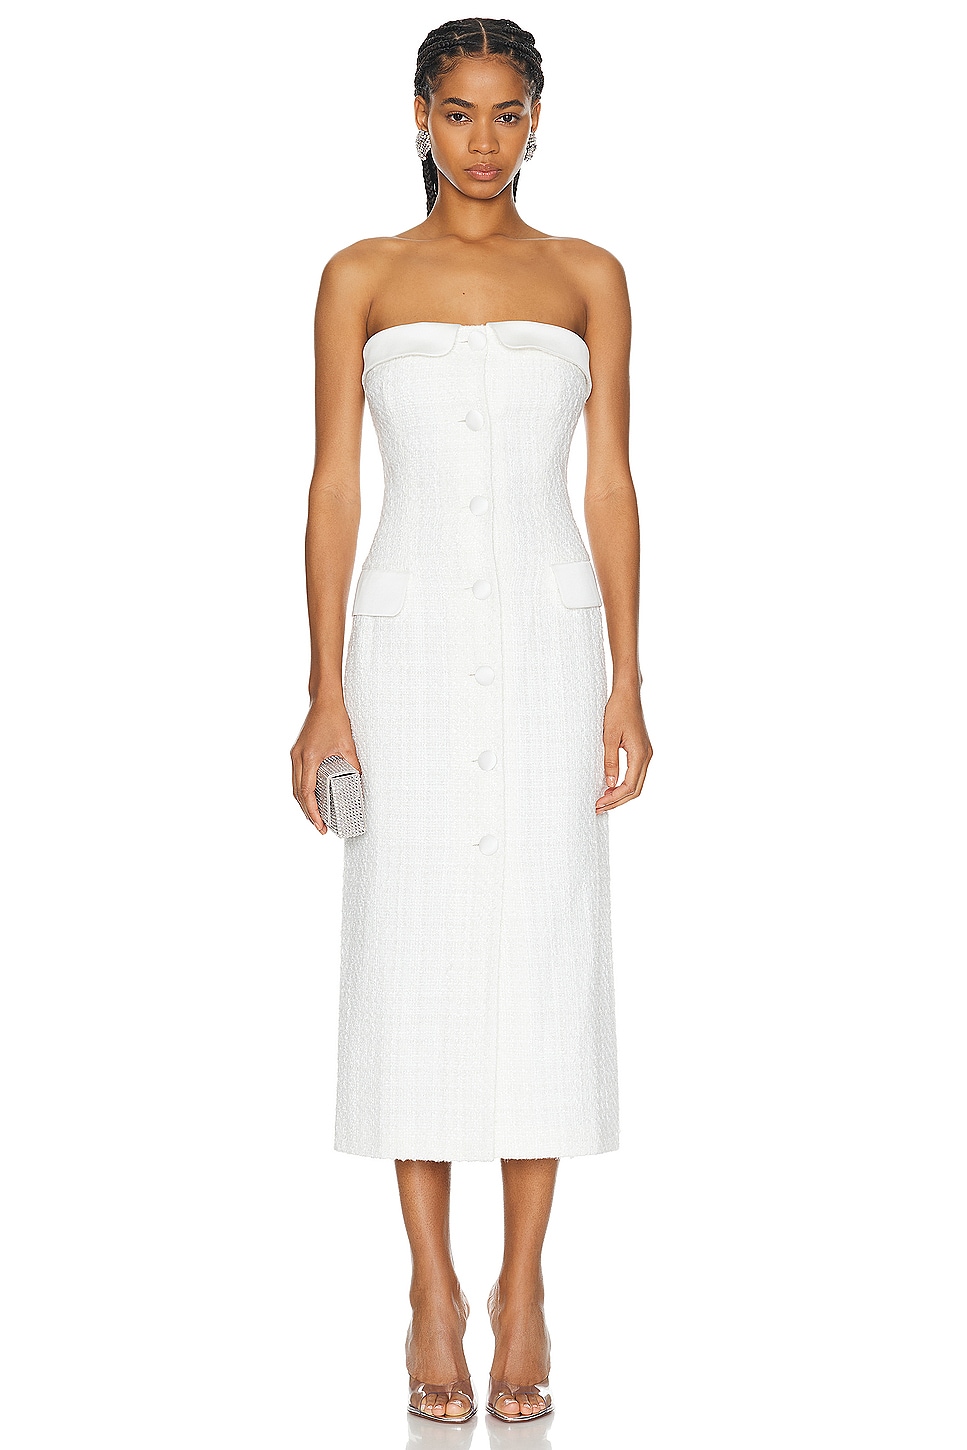 Diana Dress in White